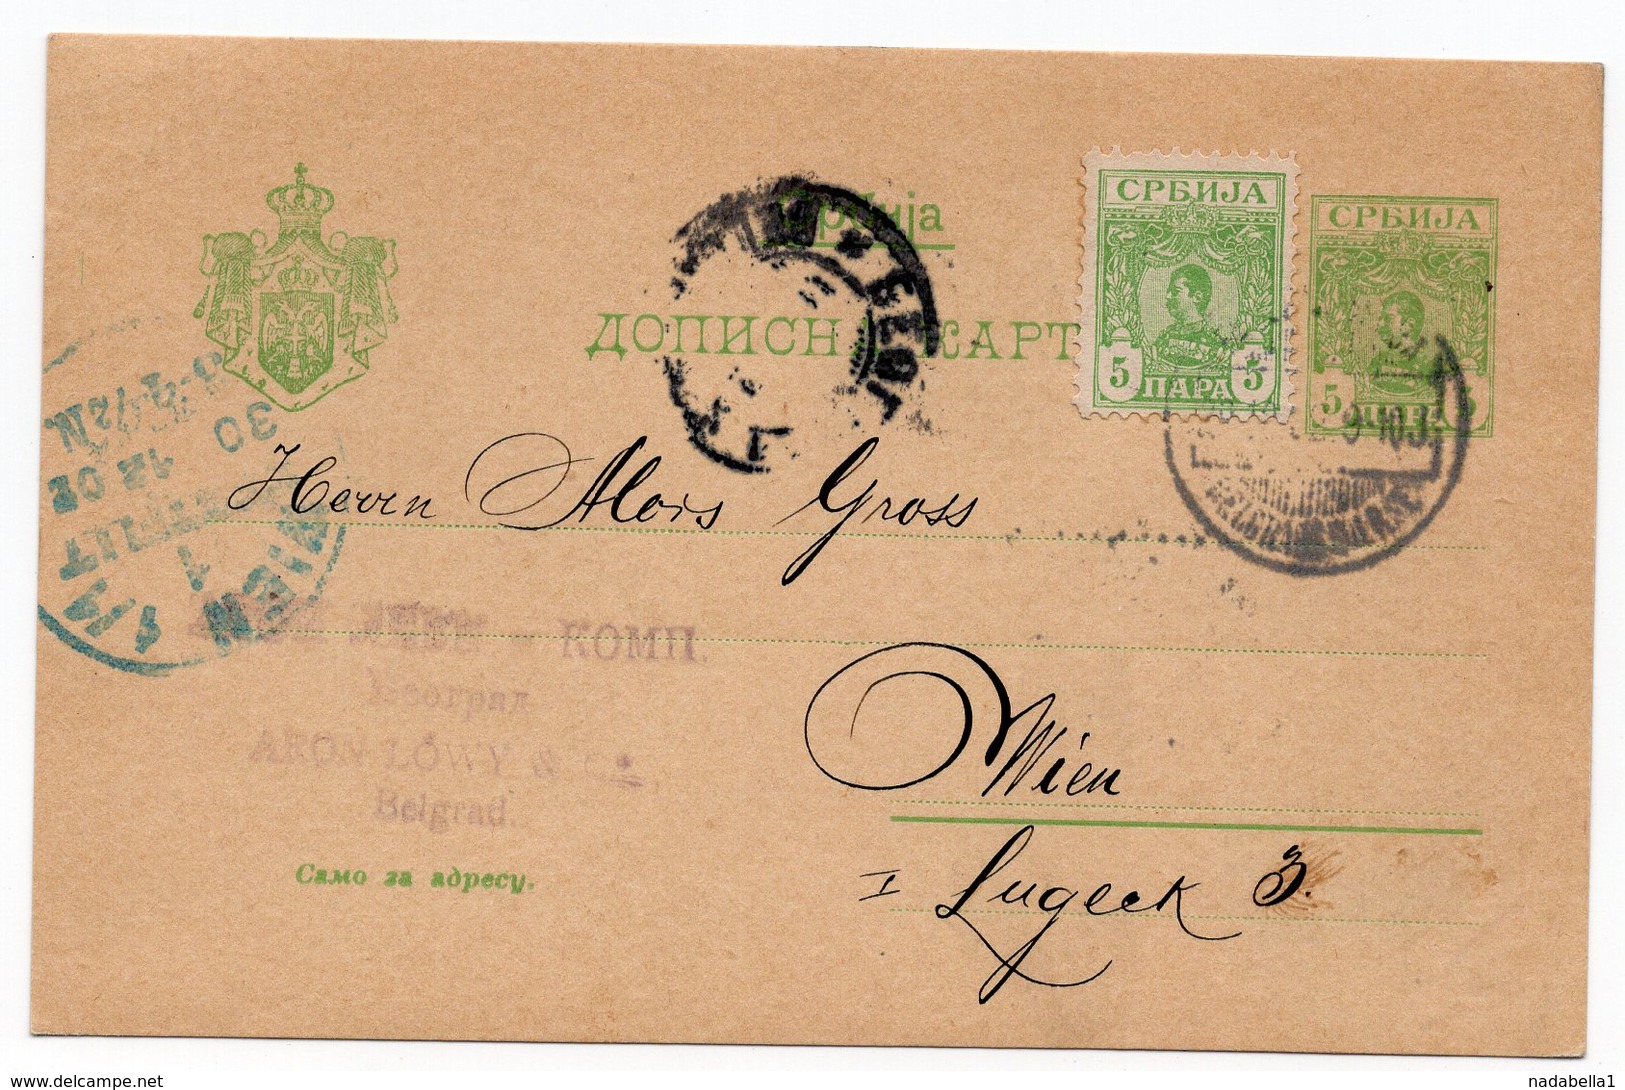 1902 SERBIA, SERBIA JUDAICA, BELGRADE TO VIENNA, ARON LOWY COMPANY FLAM, STATIONERY CARD - Serbia